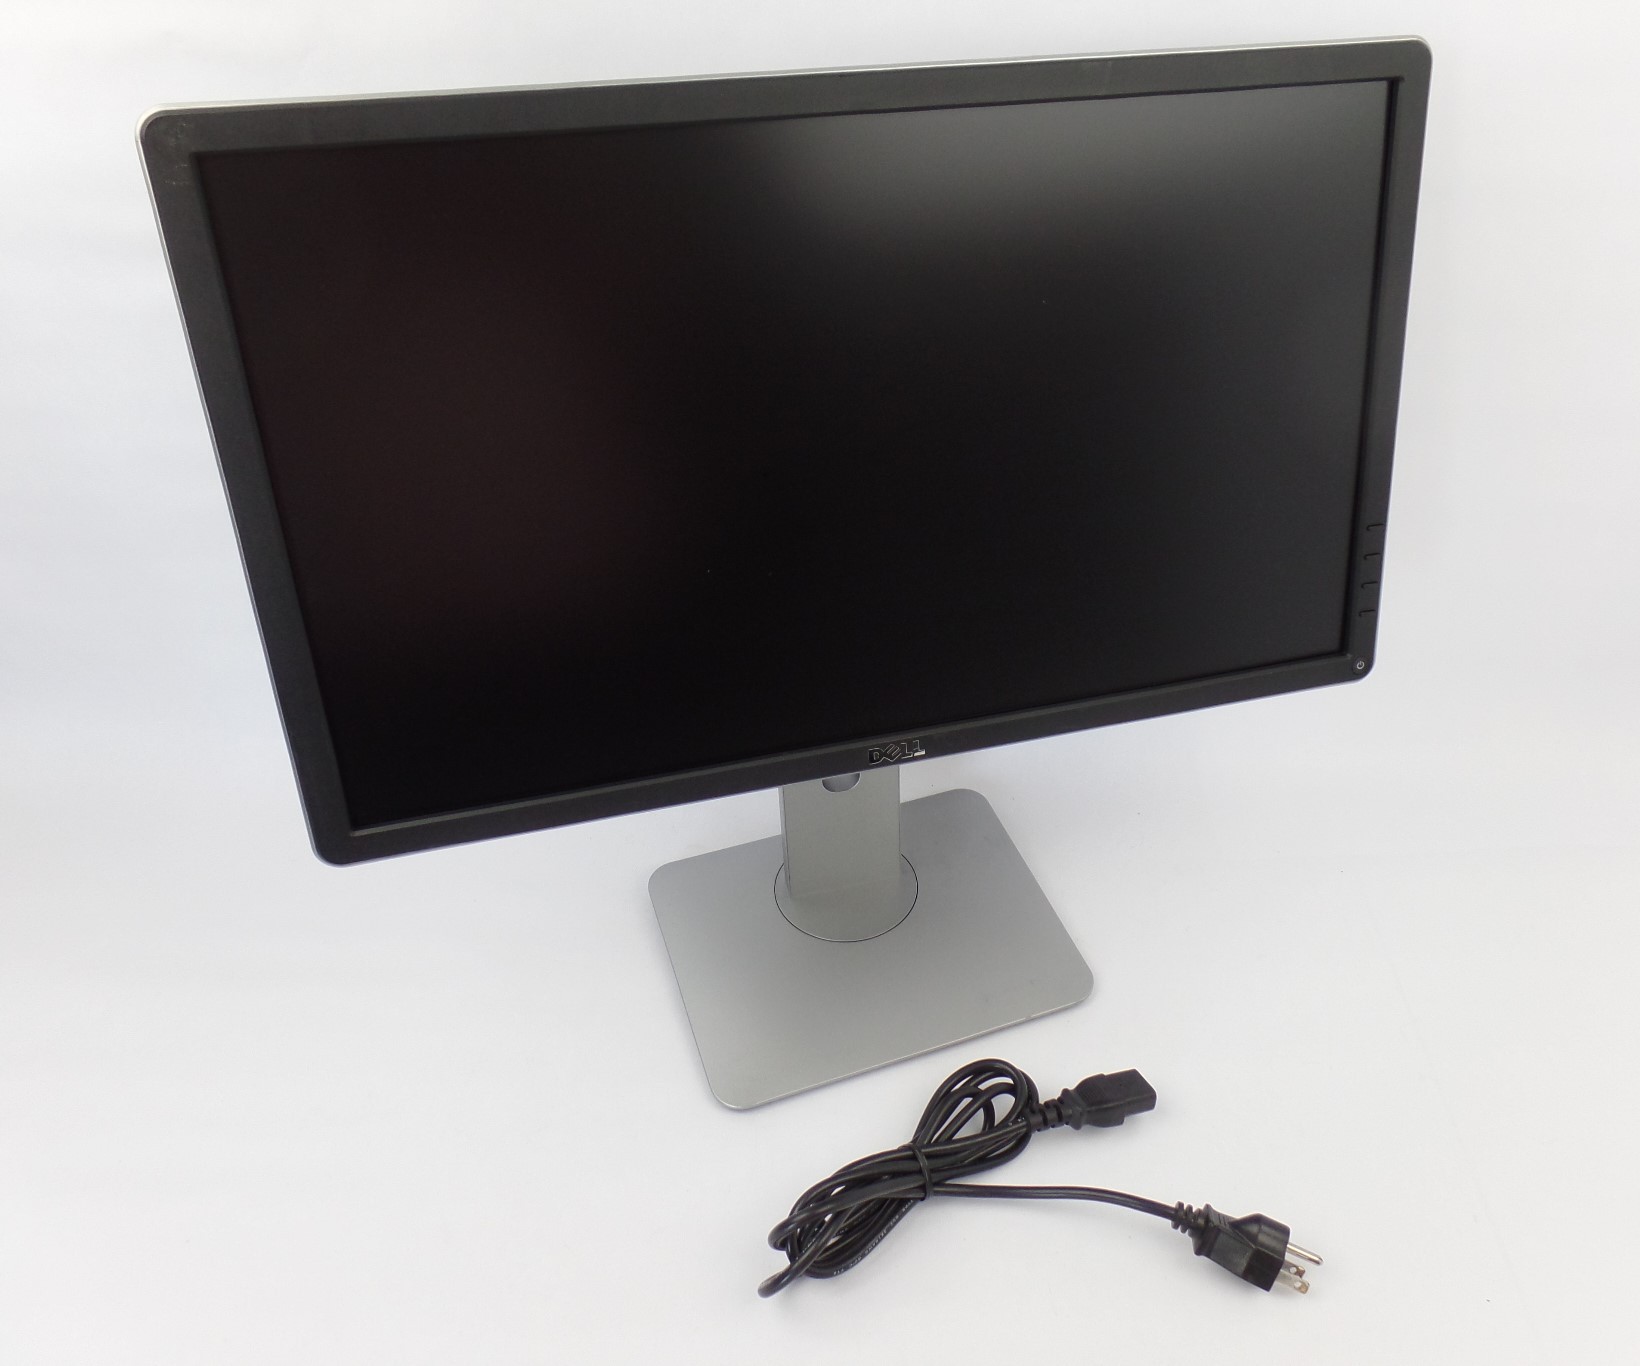 Dell P2214Hb 22" FHD LED-Backlit LCD Monitor w/ TFT active matrix RevA06 0KW14V